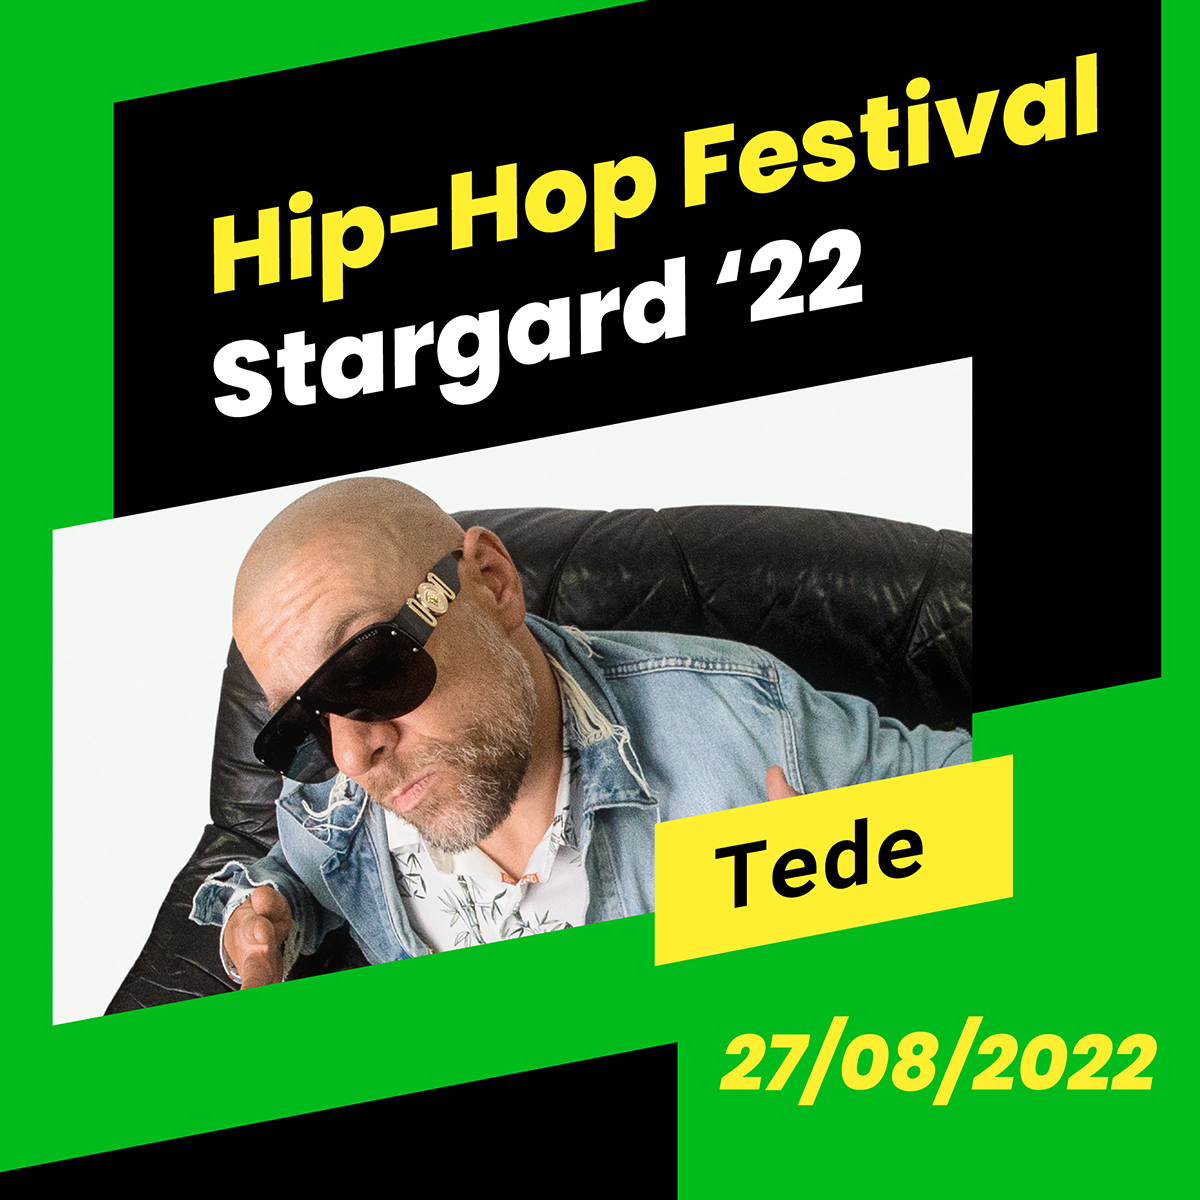 Hip-Hop Festival Stargard_Tede